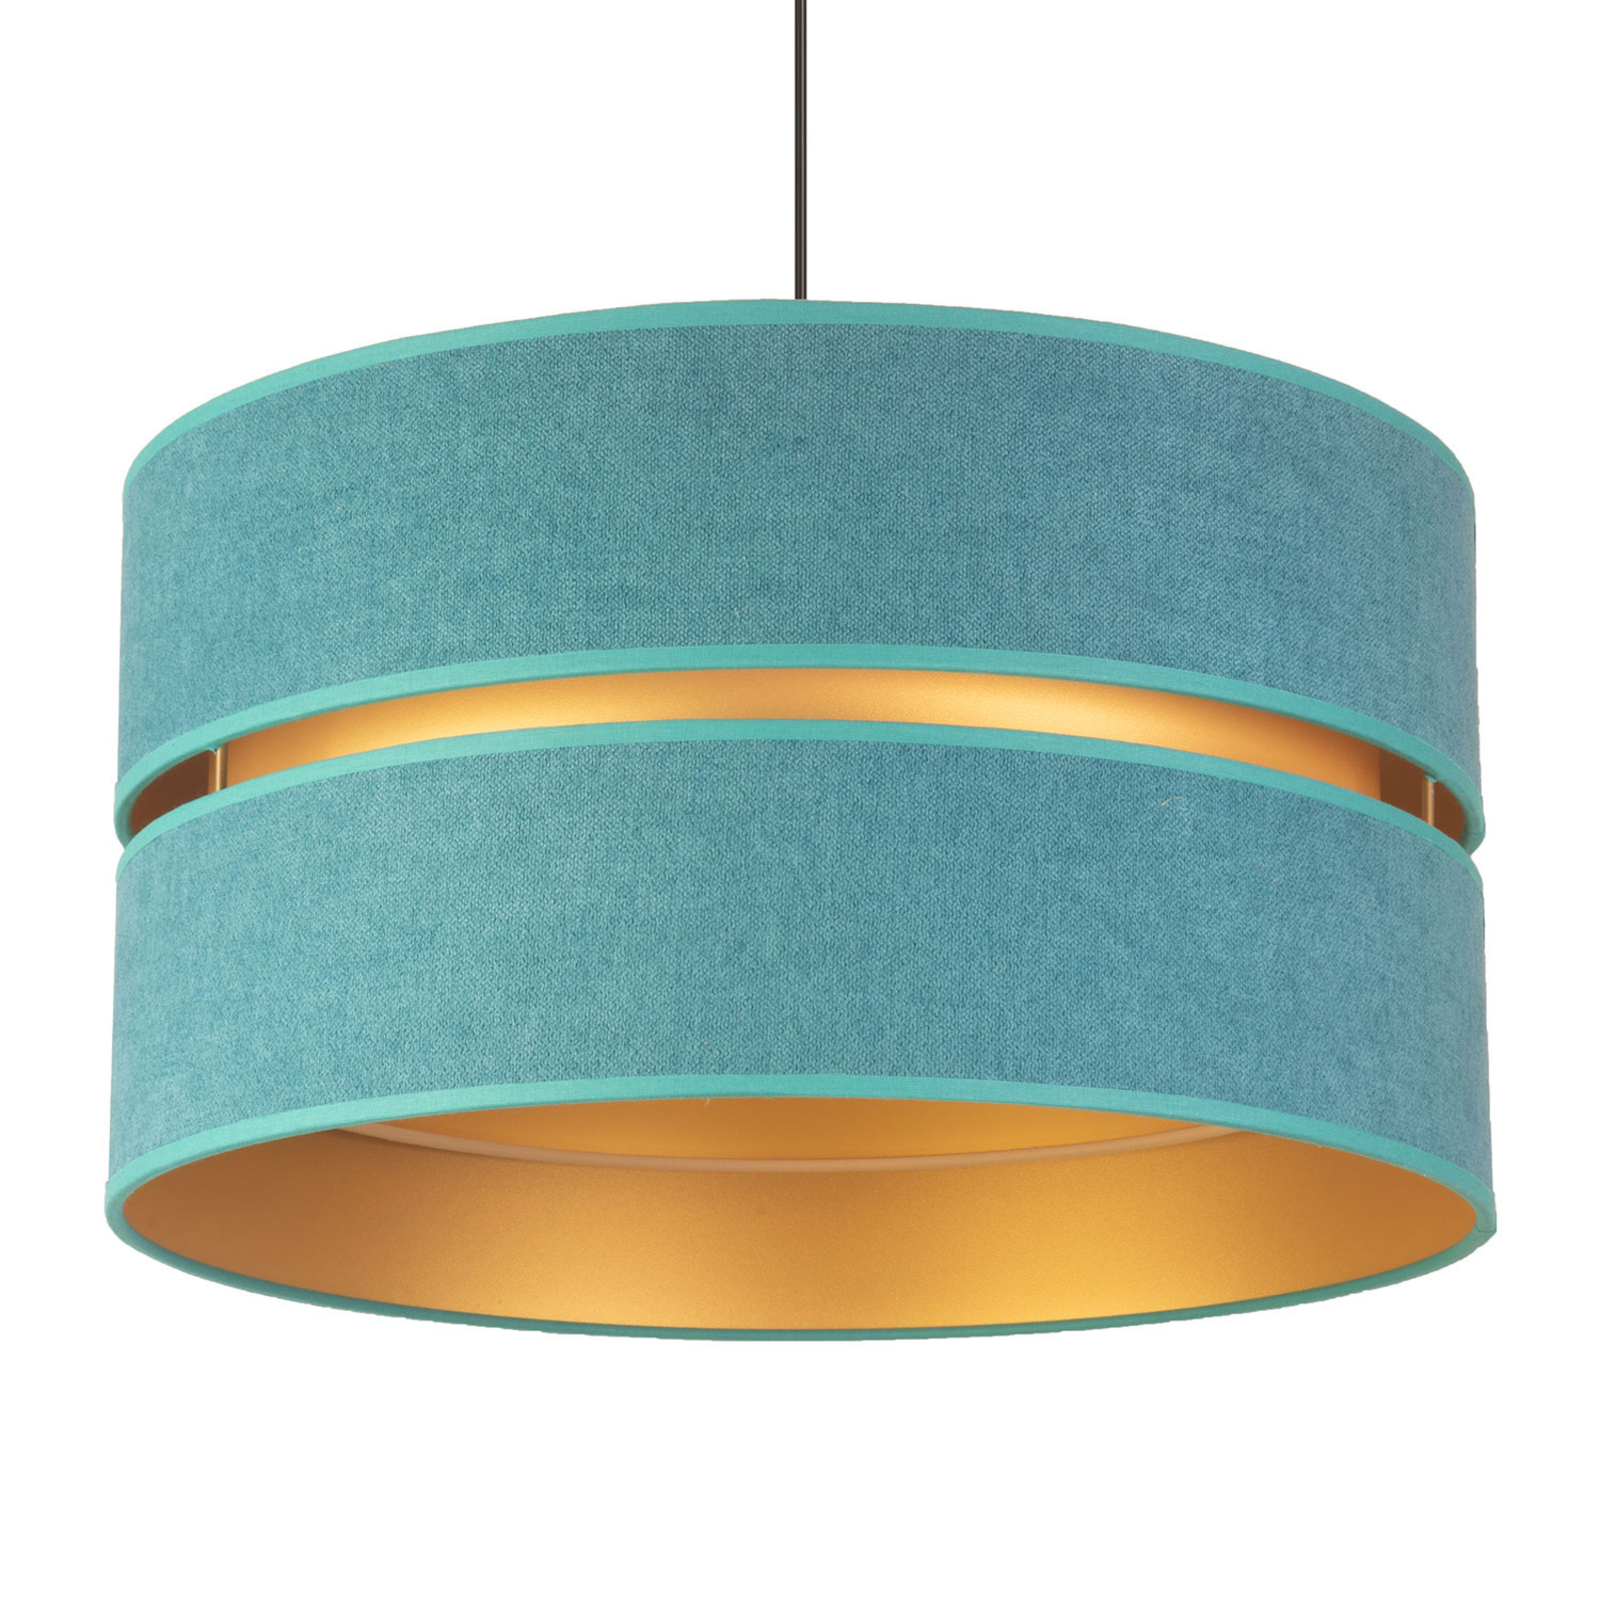 Golden Duo hanglamp, turquoise/goud, Ø40cm, 1-lamp